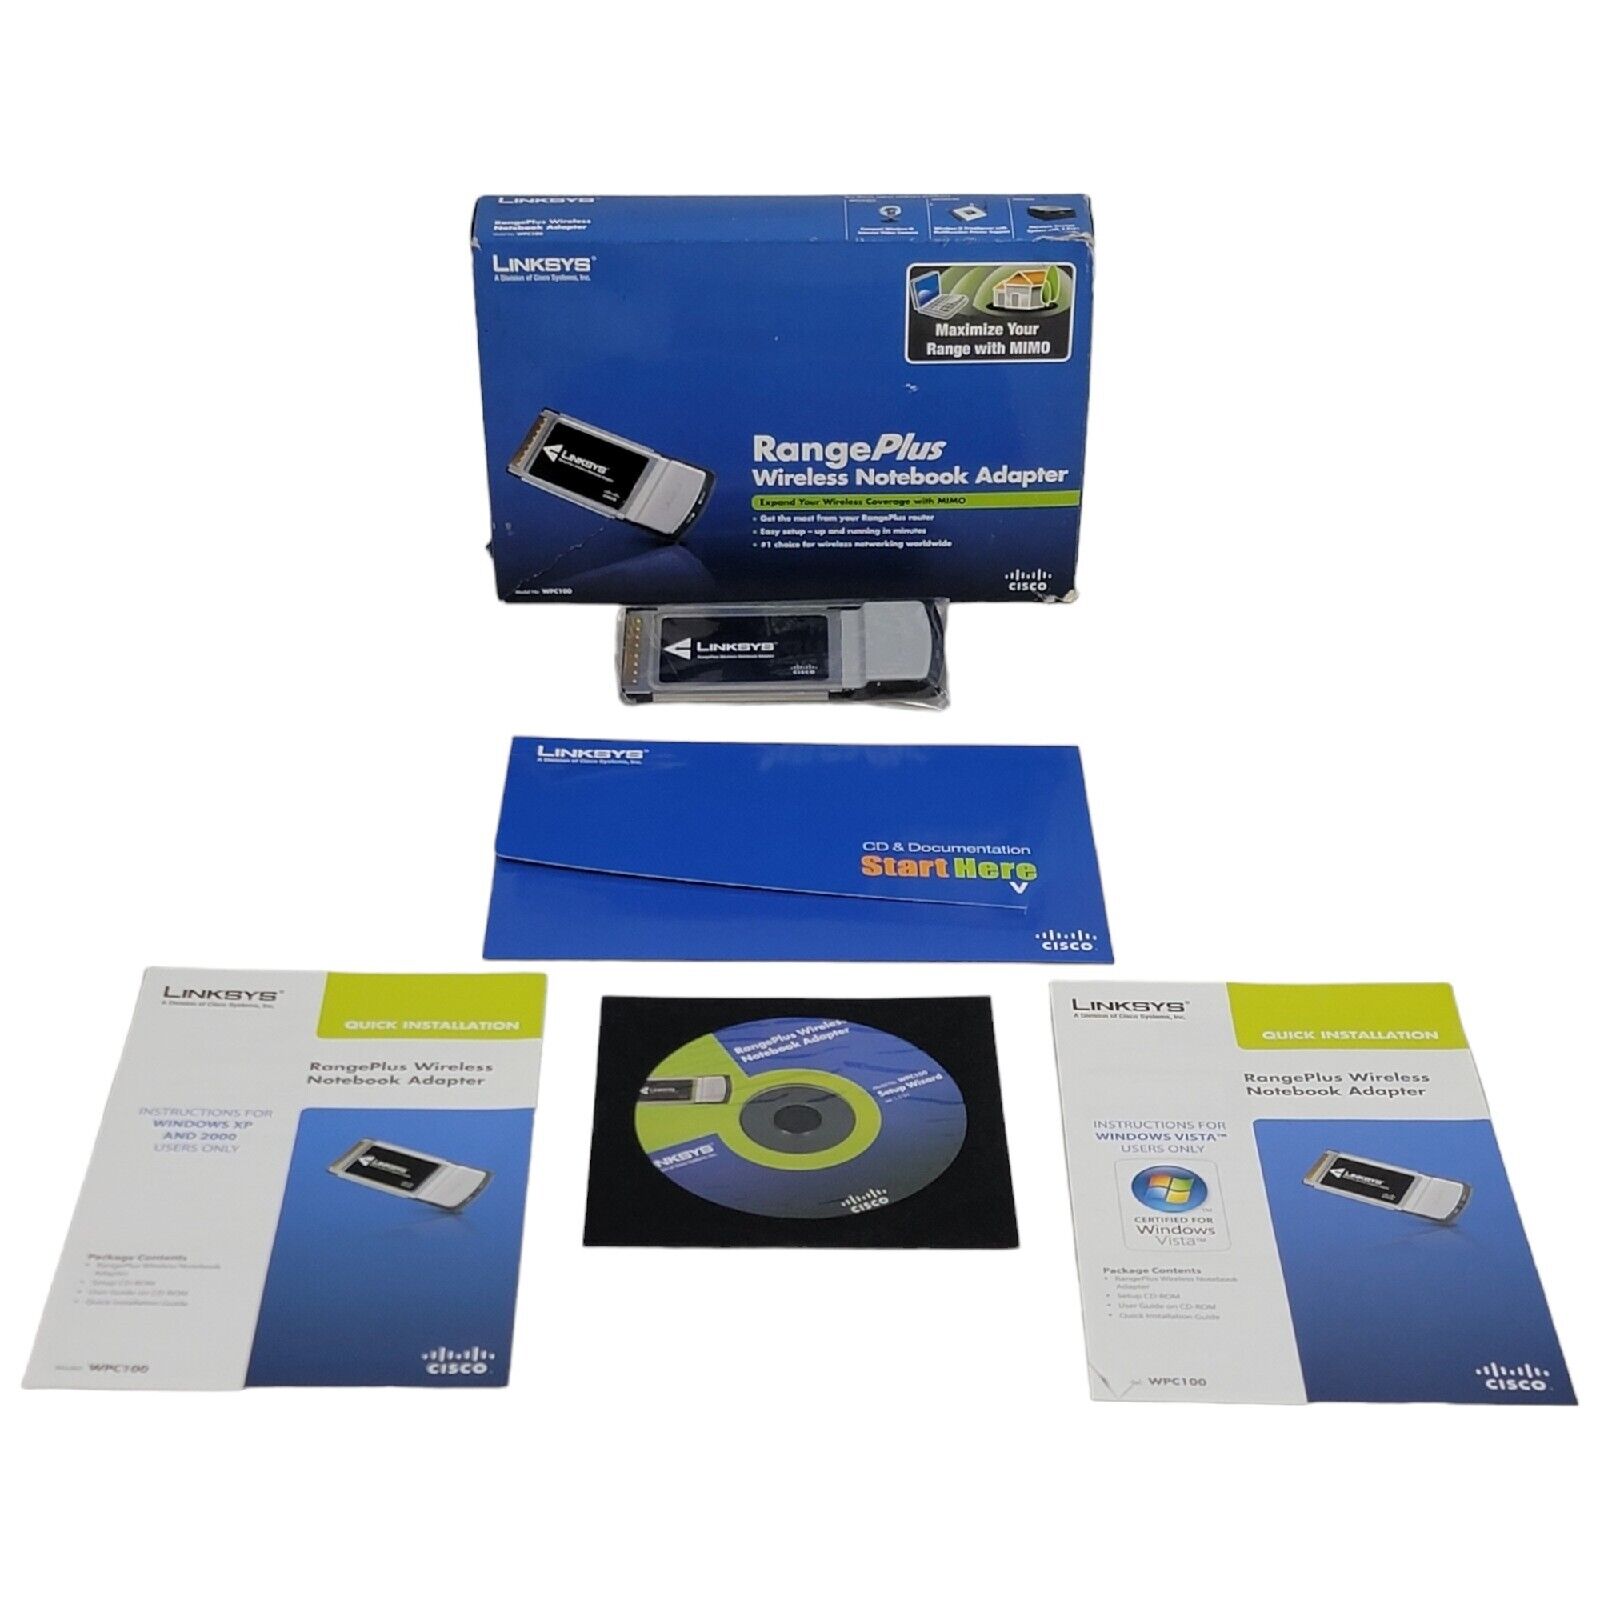 Linksys Range Plus Wireless Notebook Adapter No. WPC100